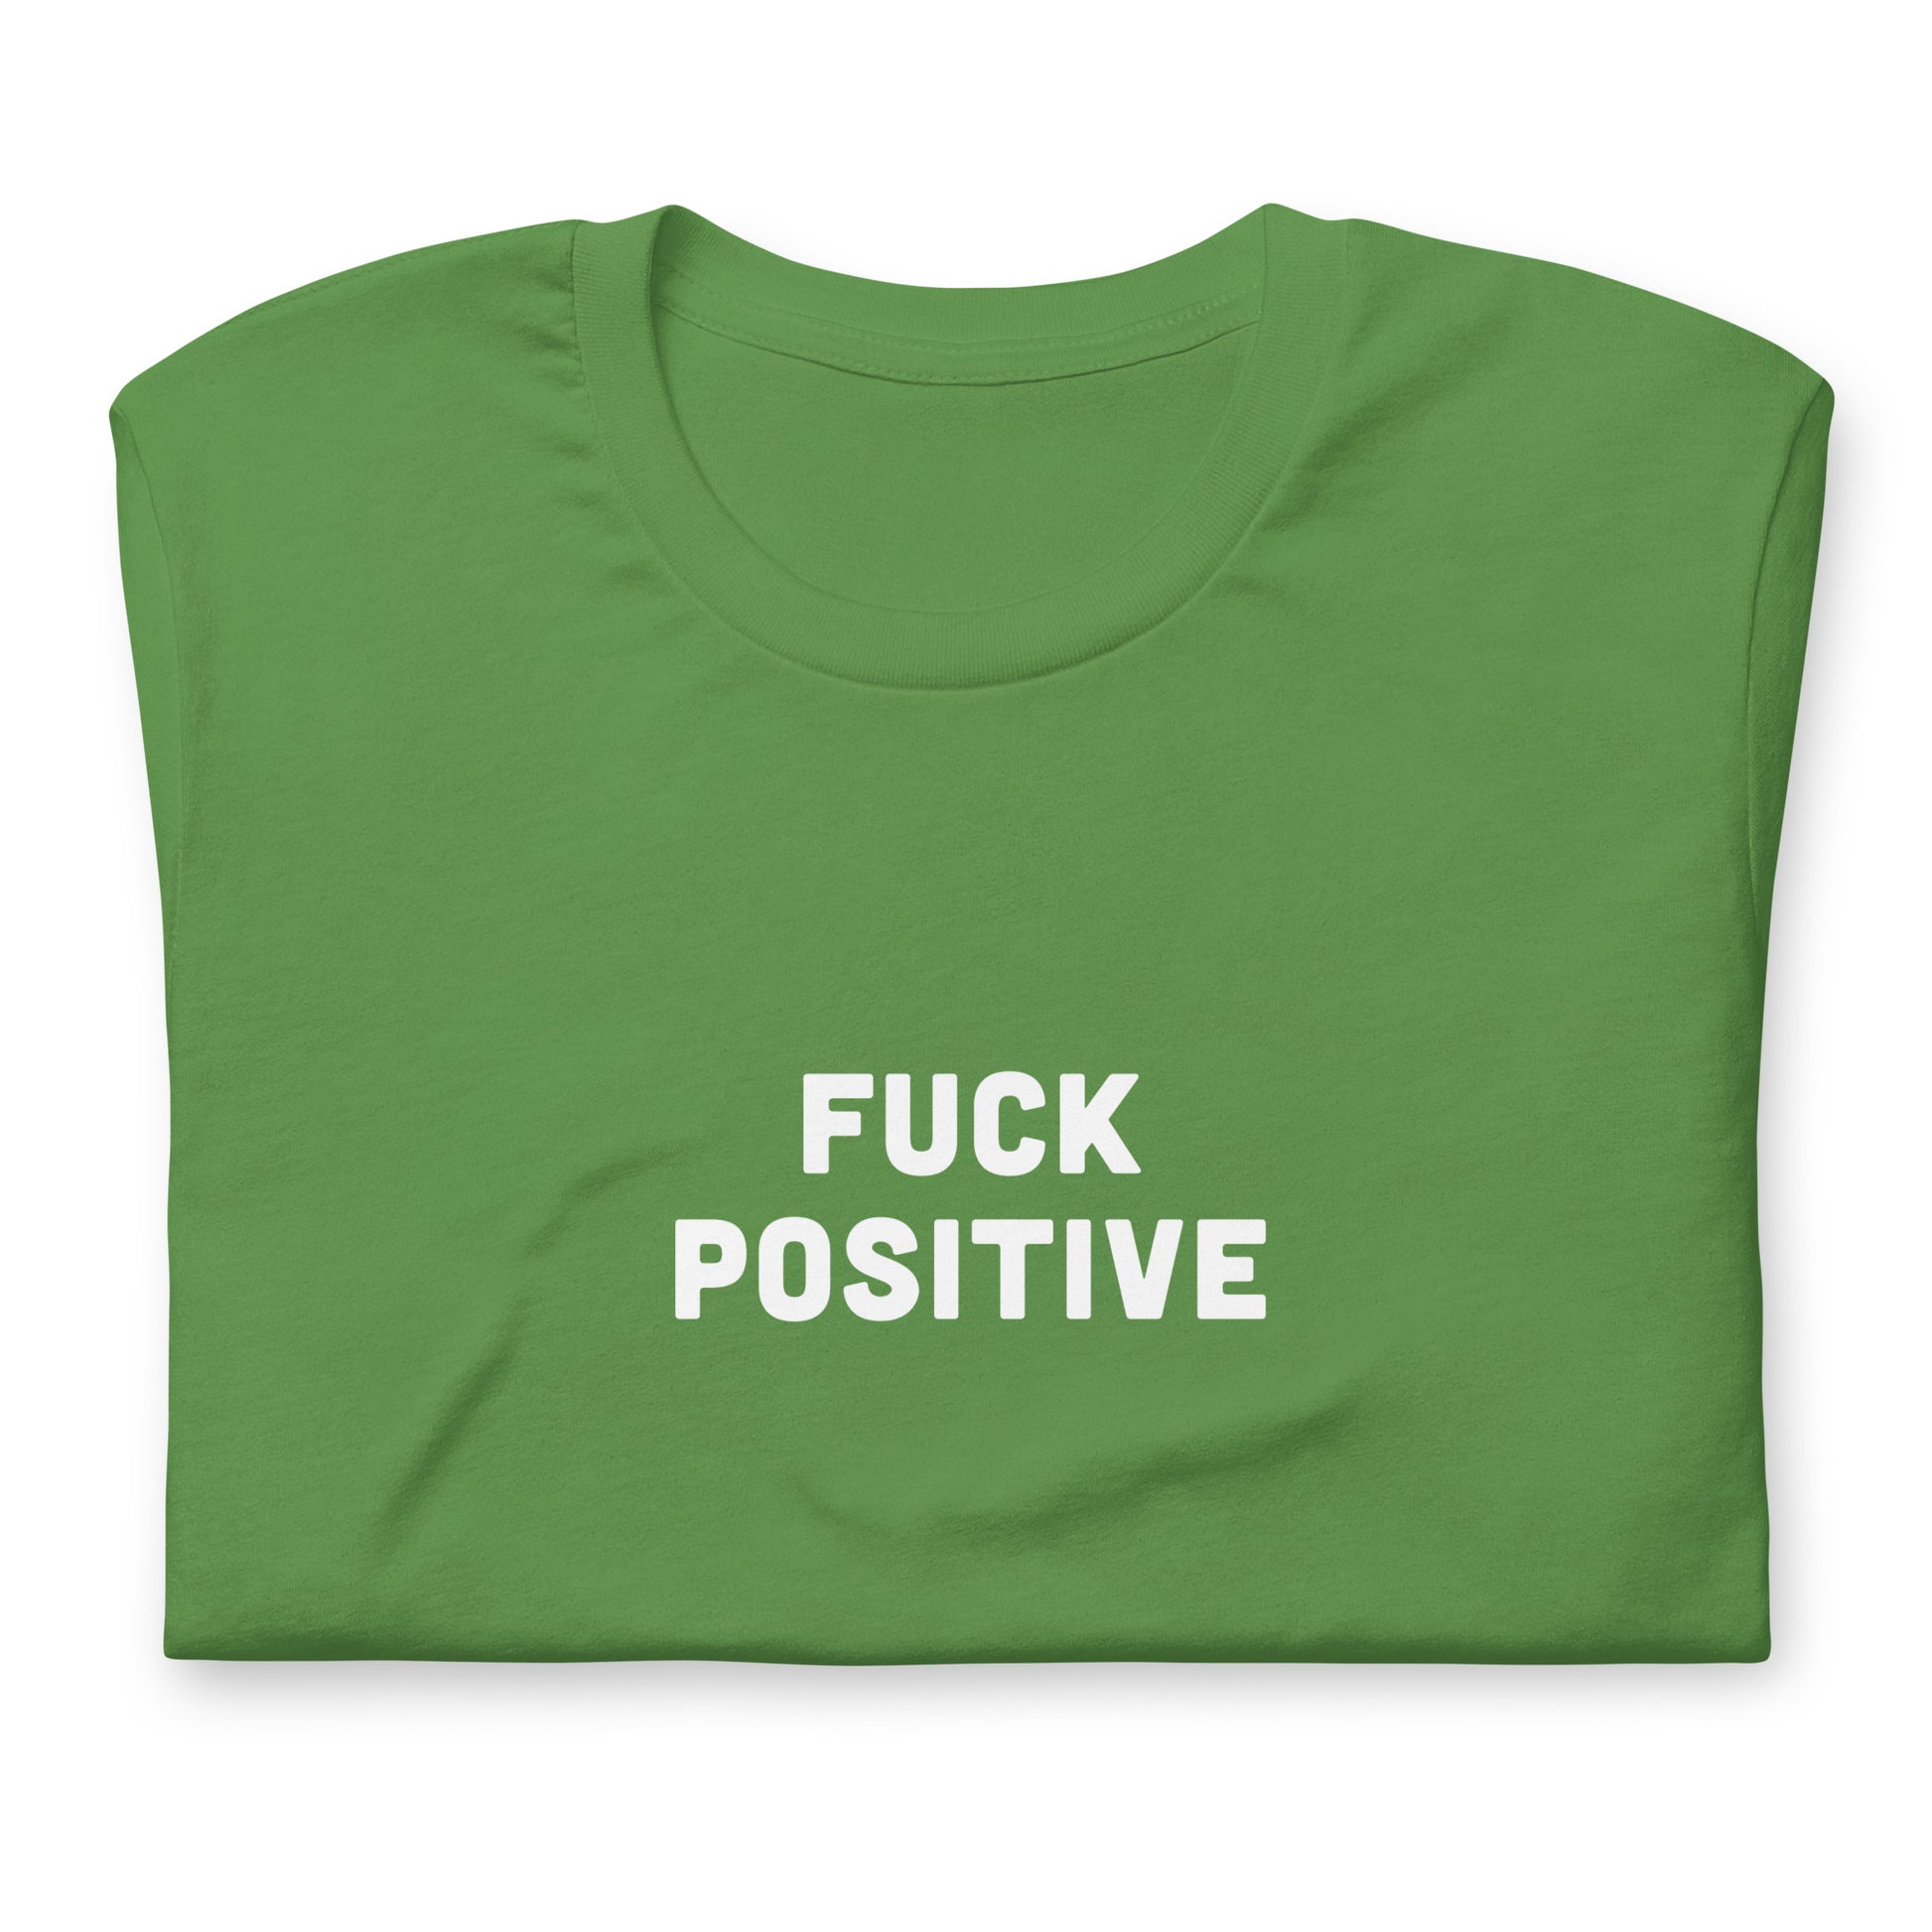 Fuck Positive T-Shirt Size S Color Forest